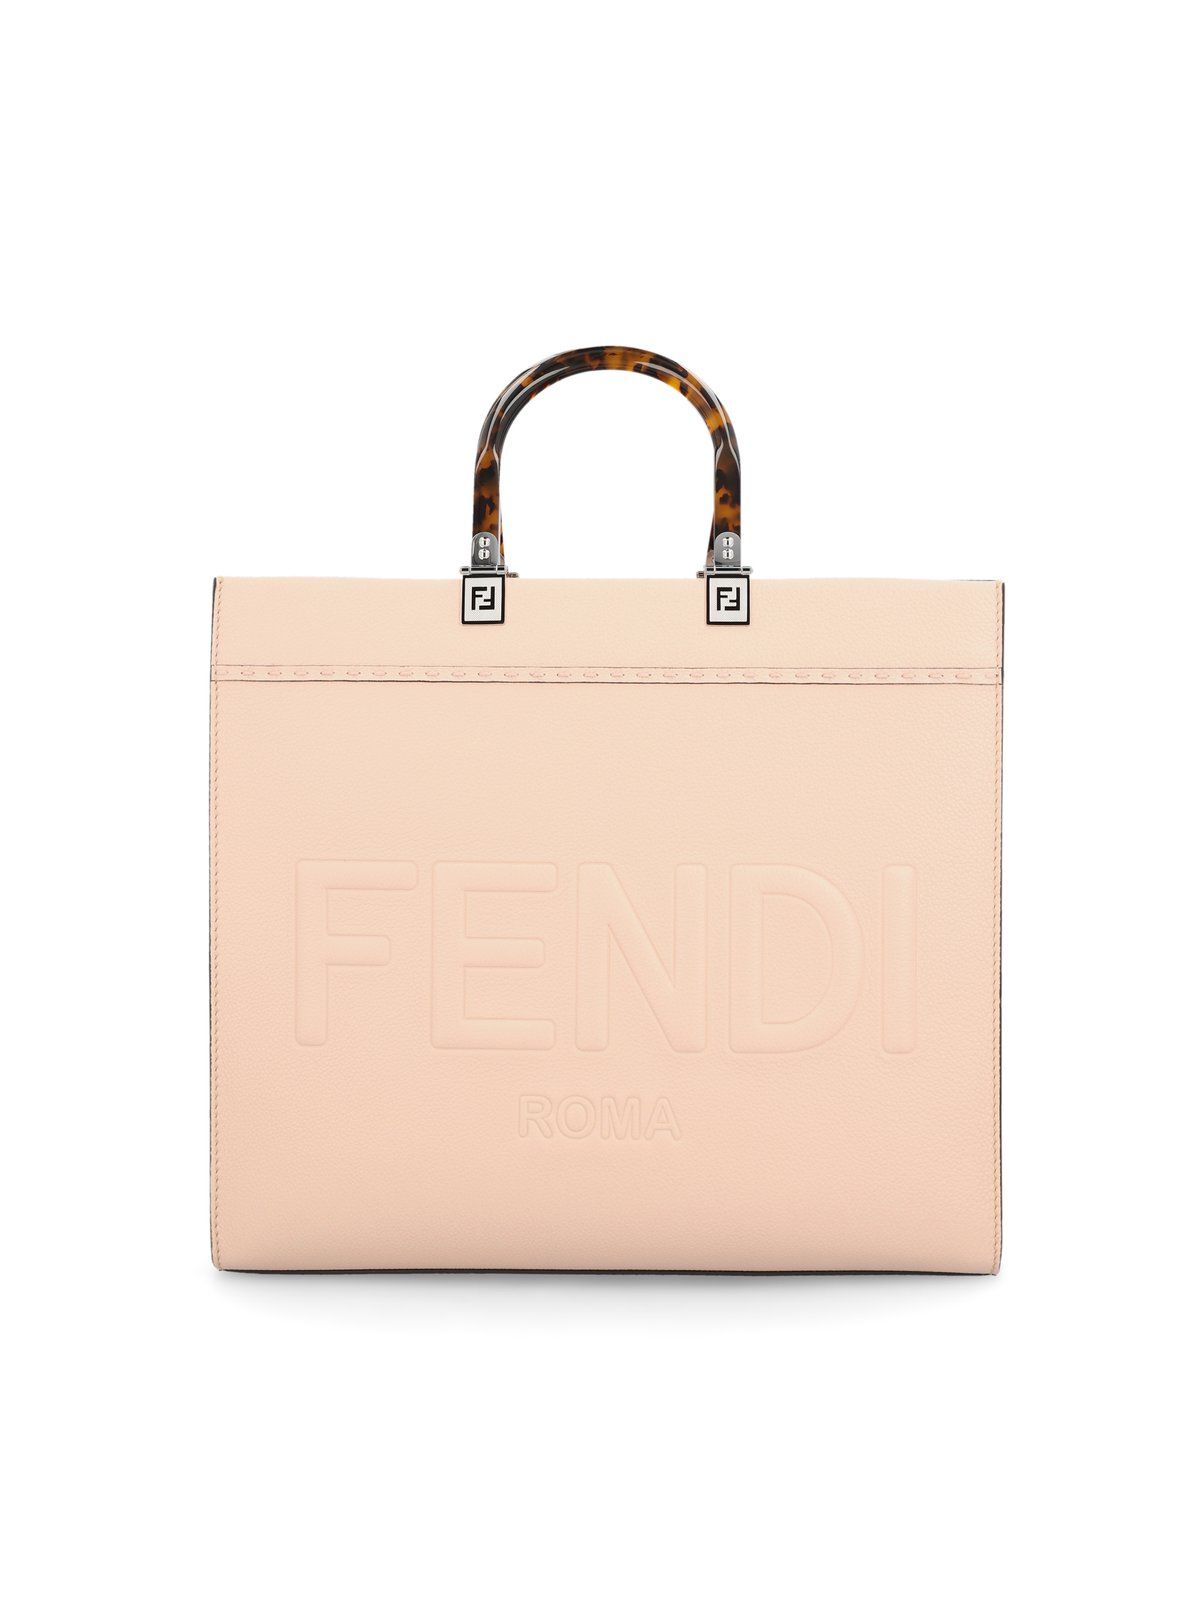 Fendi Logo Debossed Tote Bag | Cettire Global